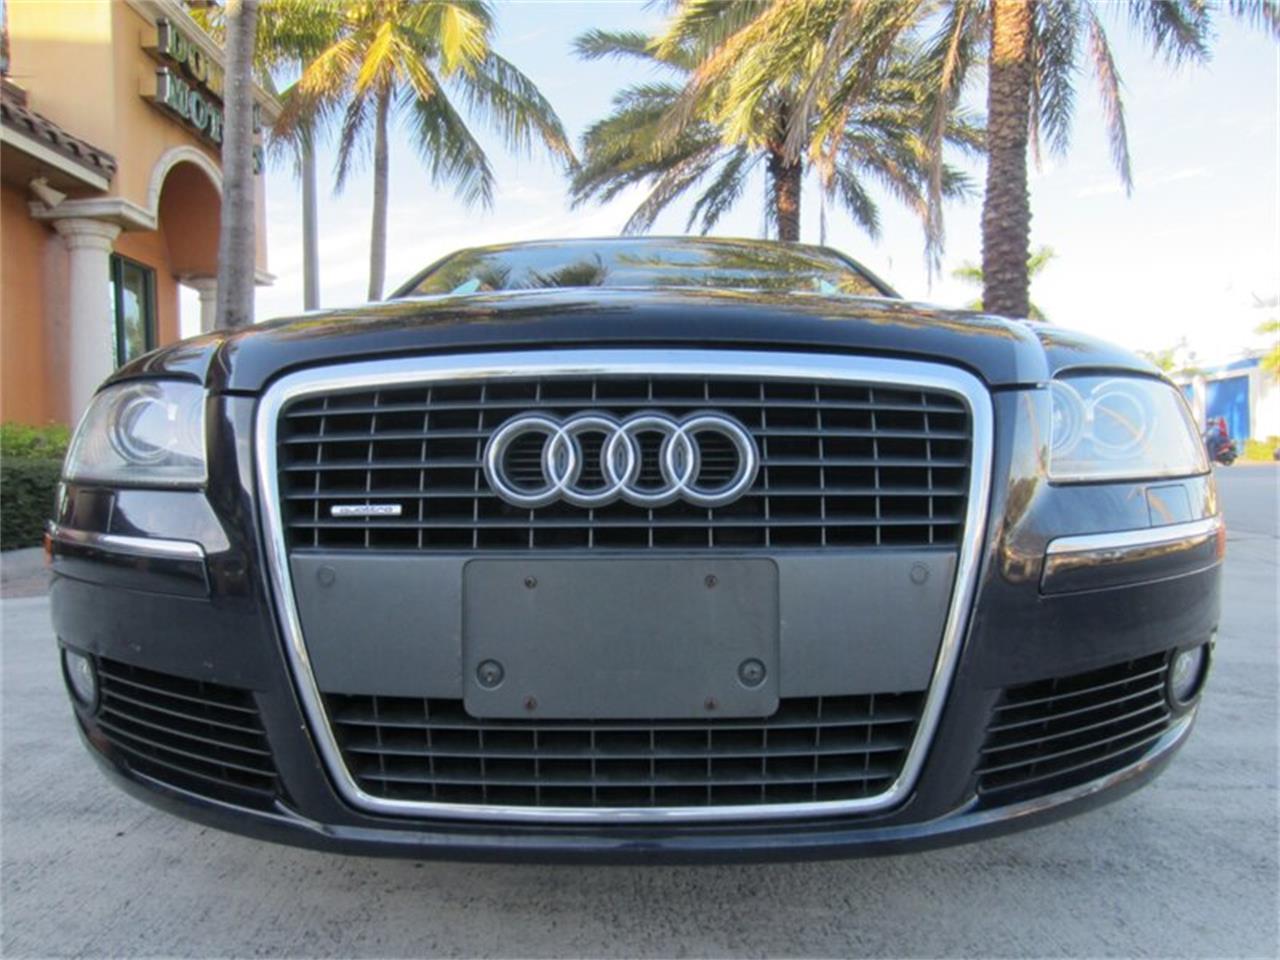 2006 Audi A8 for sale in Delray Beach, FL – photo 17